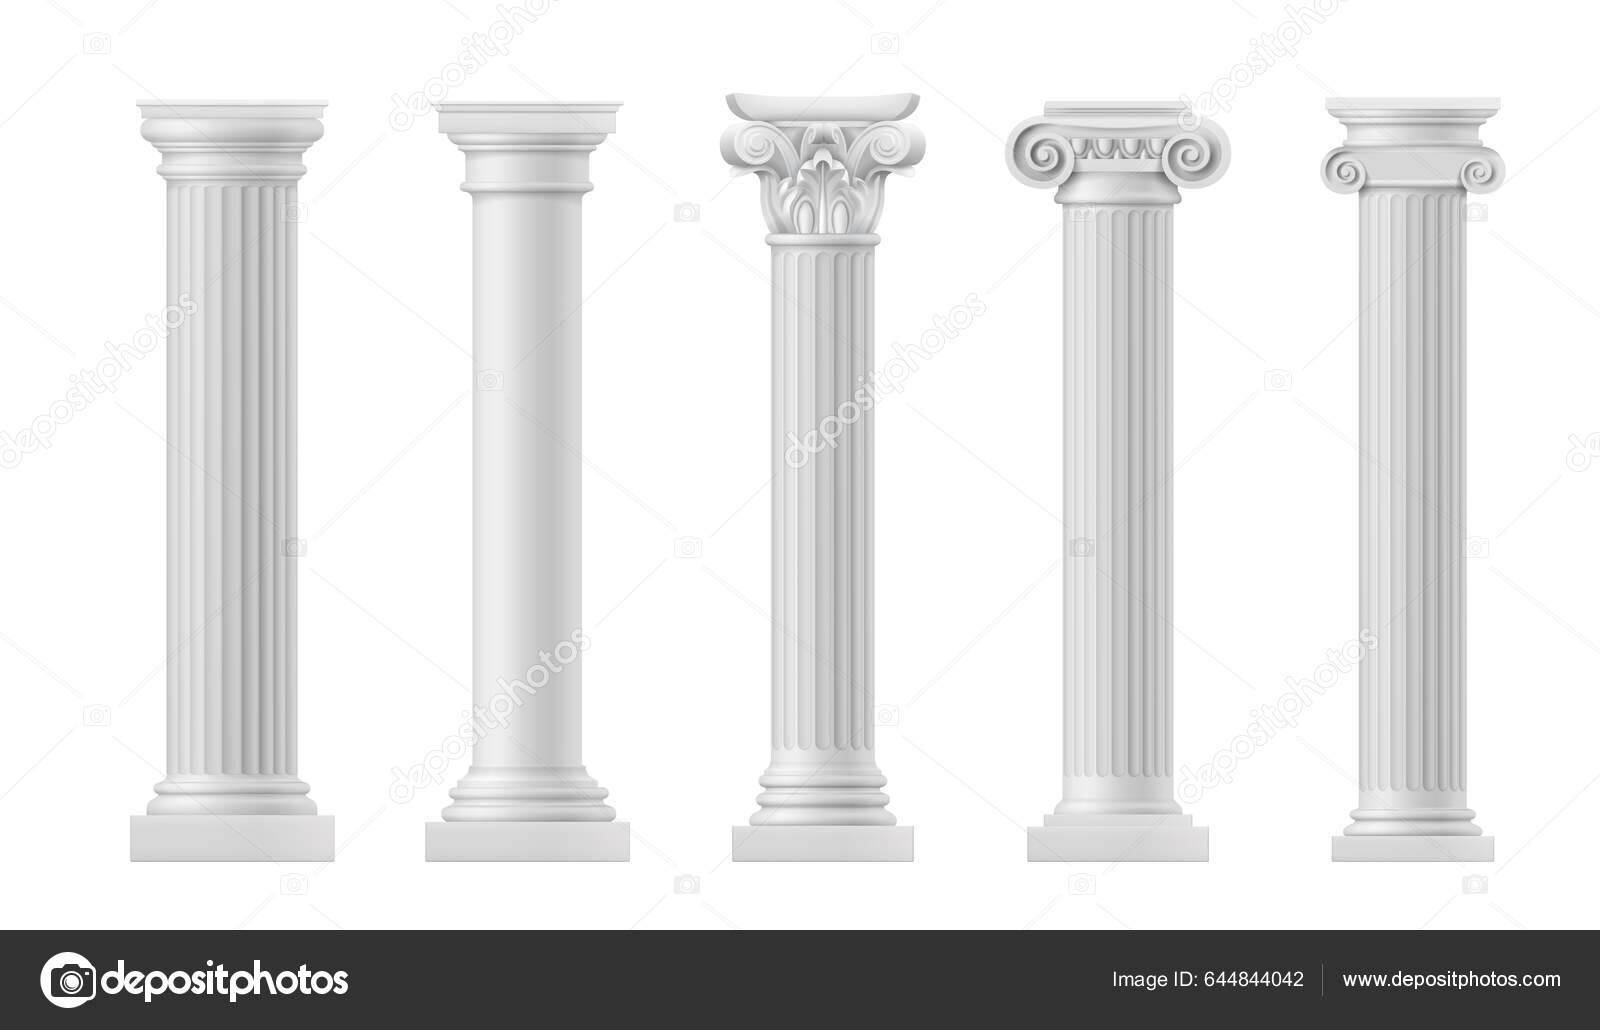 https://st5.depositphotos.com/1020070/64484/v/1600/depositphotos_644844042-stock-illustration-marble-antique-columns-pillars-roman.jpg